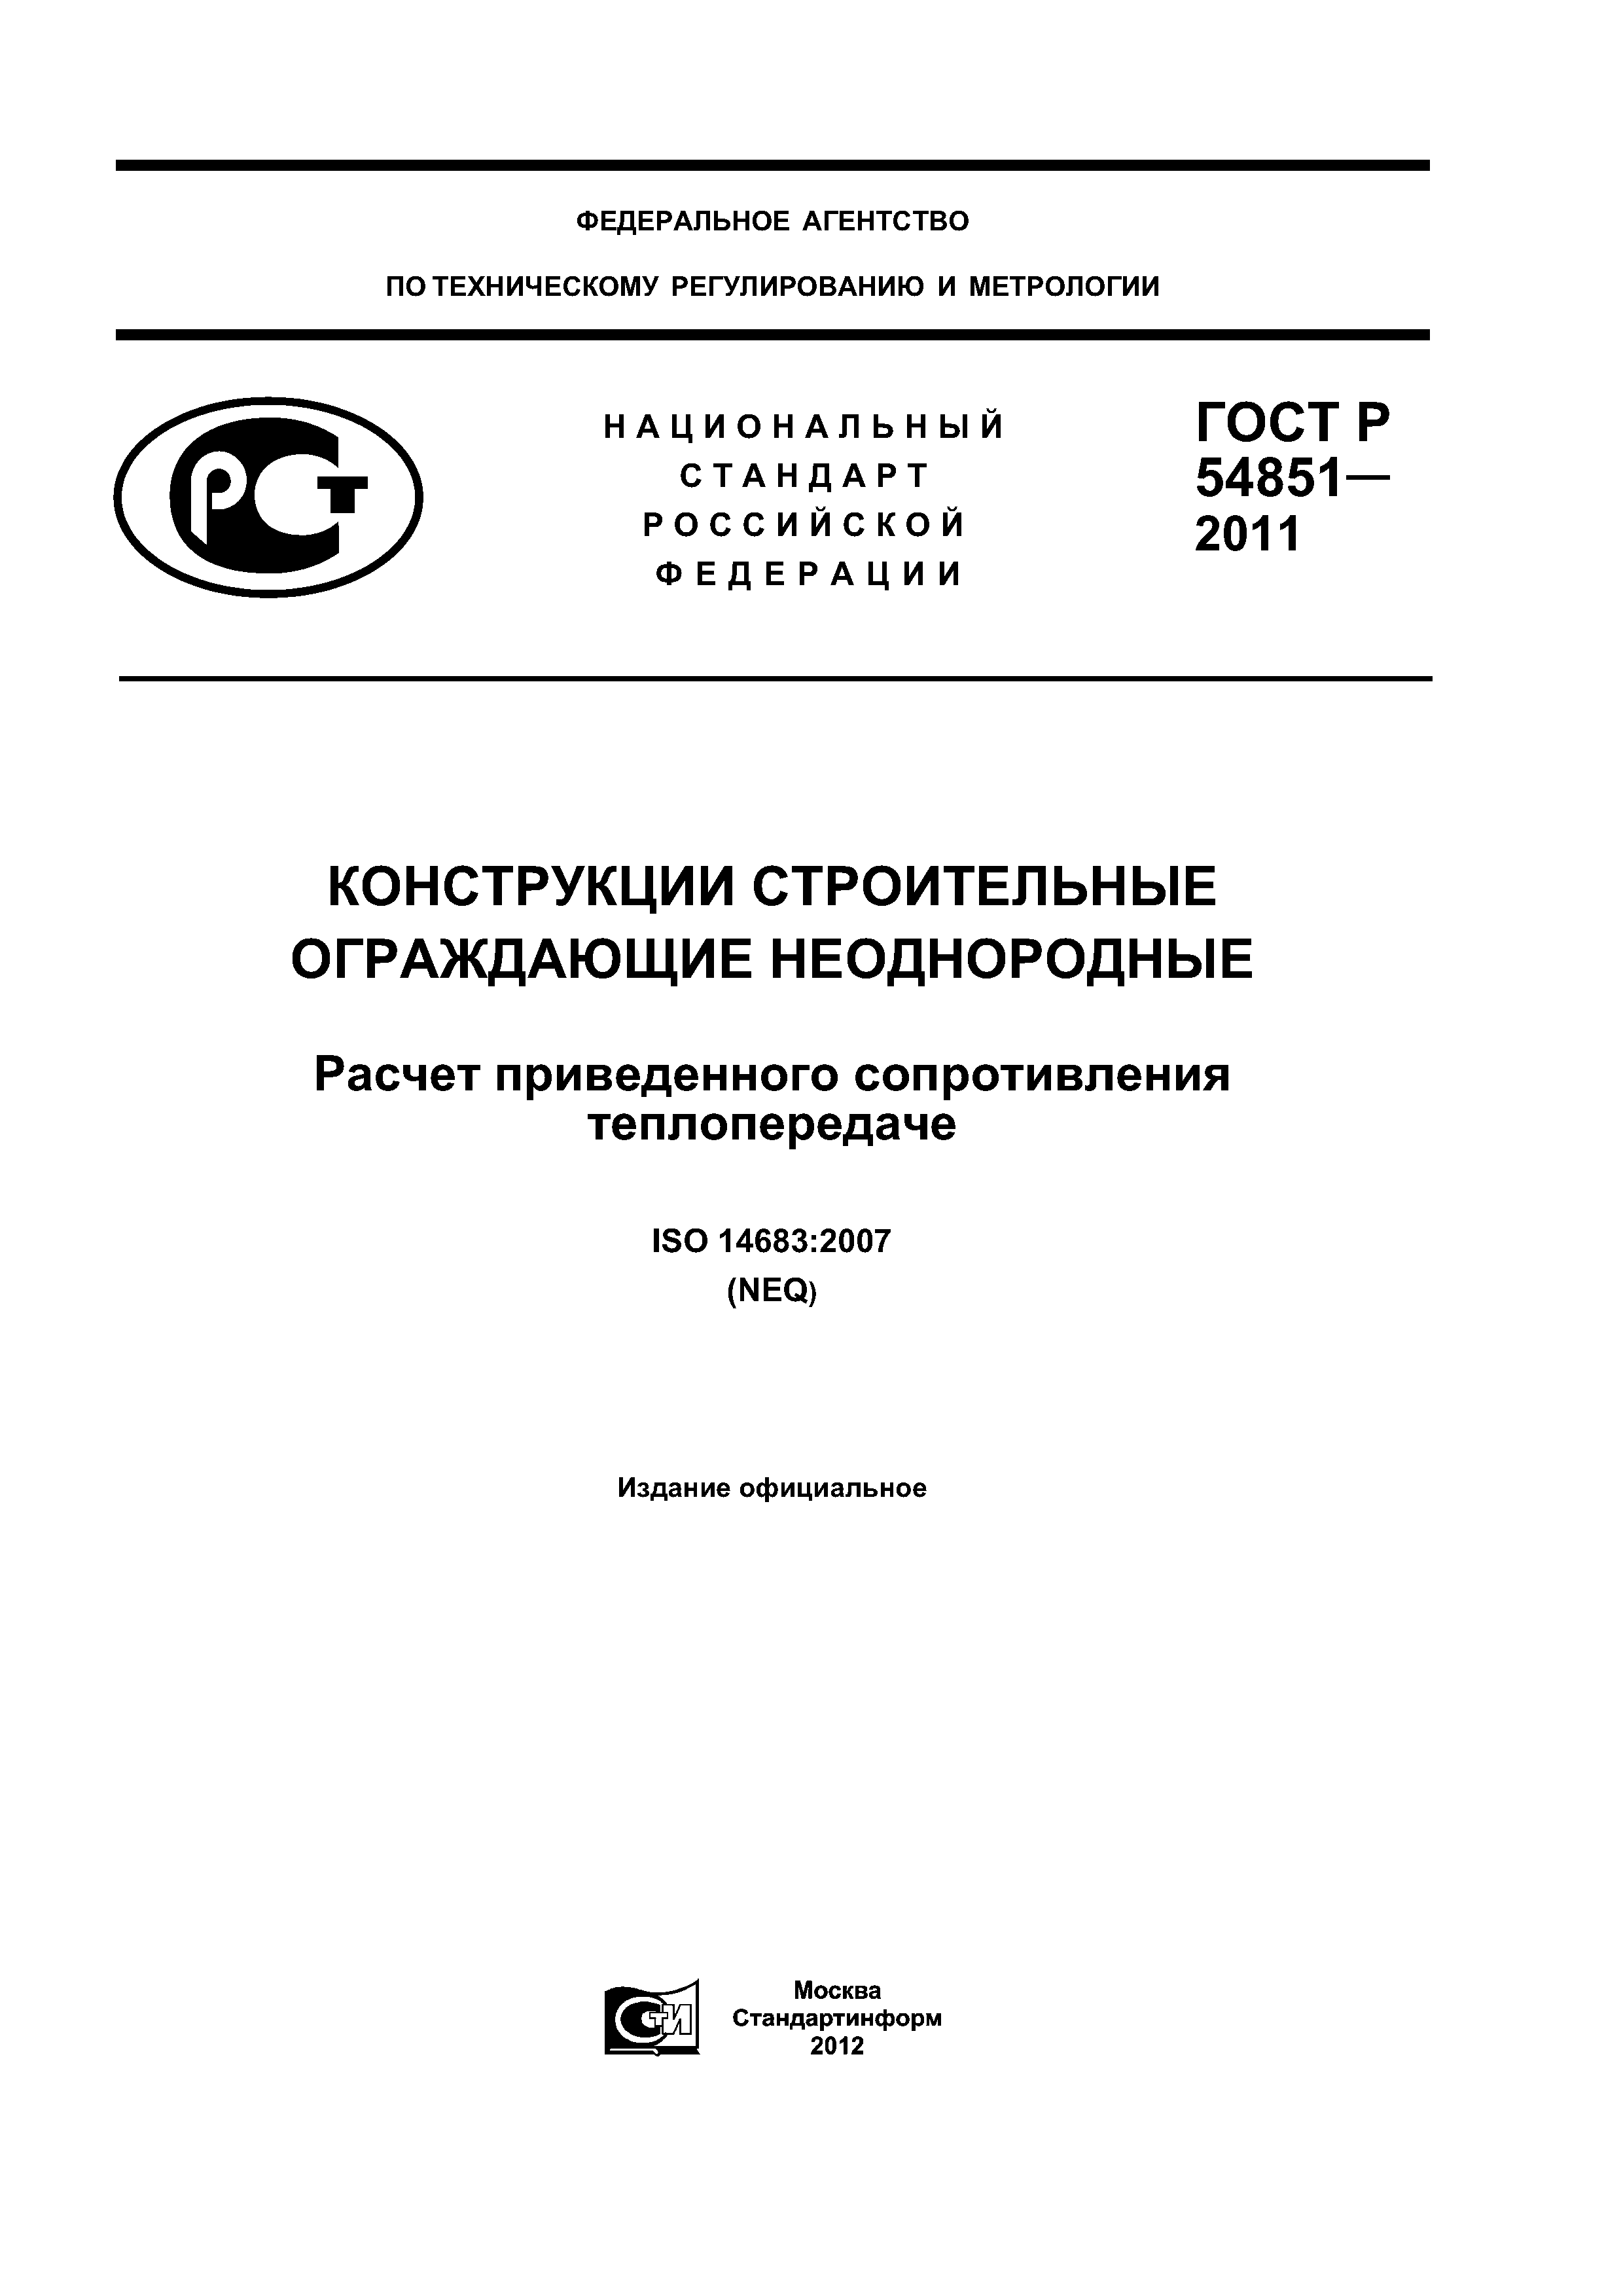 ГОСТ Р 54851-2011